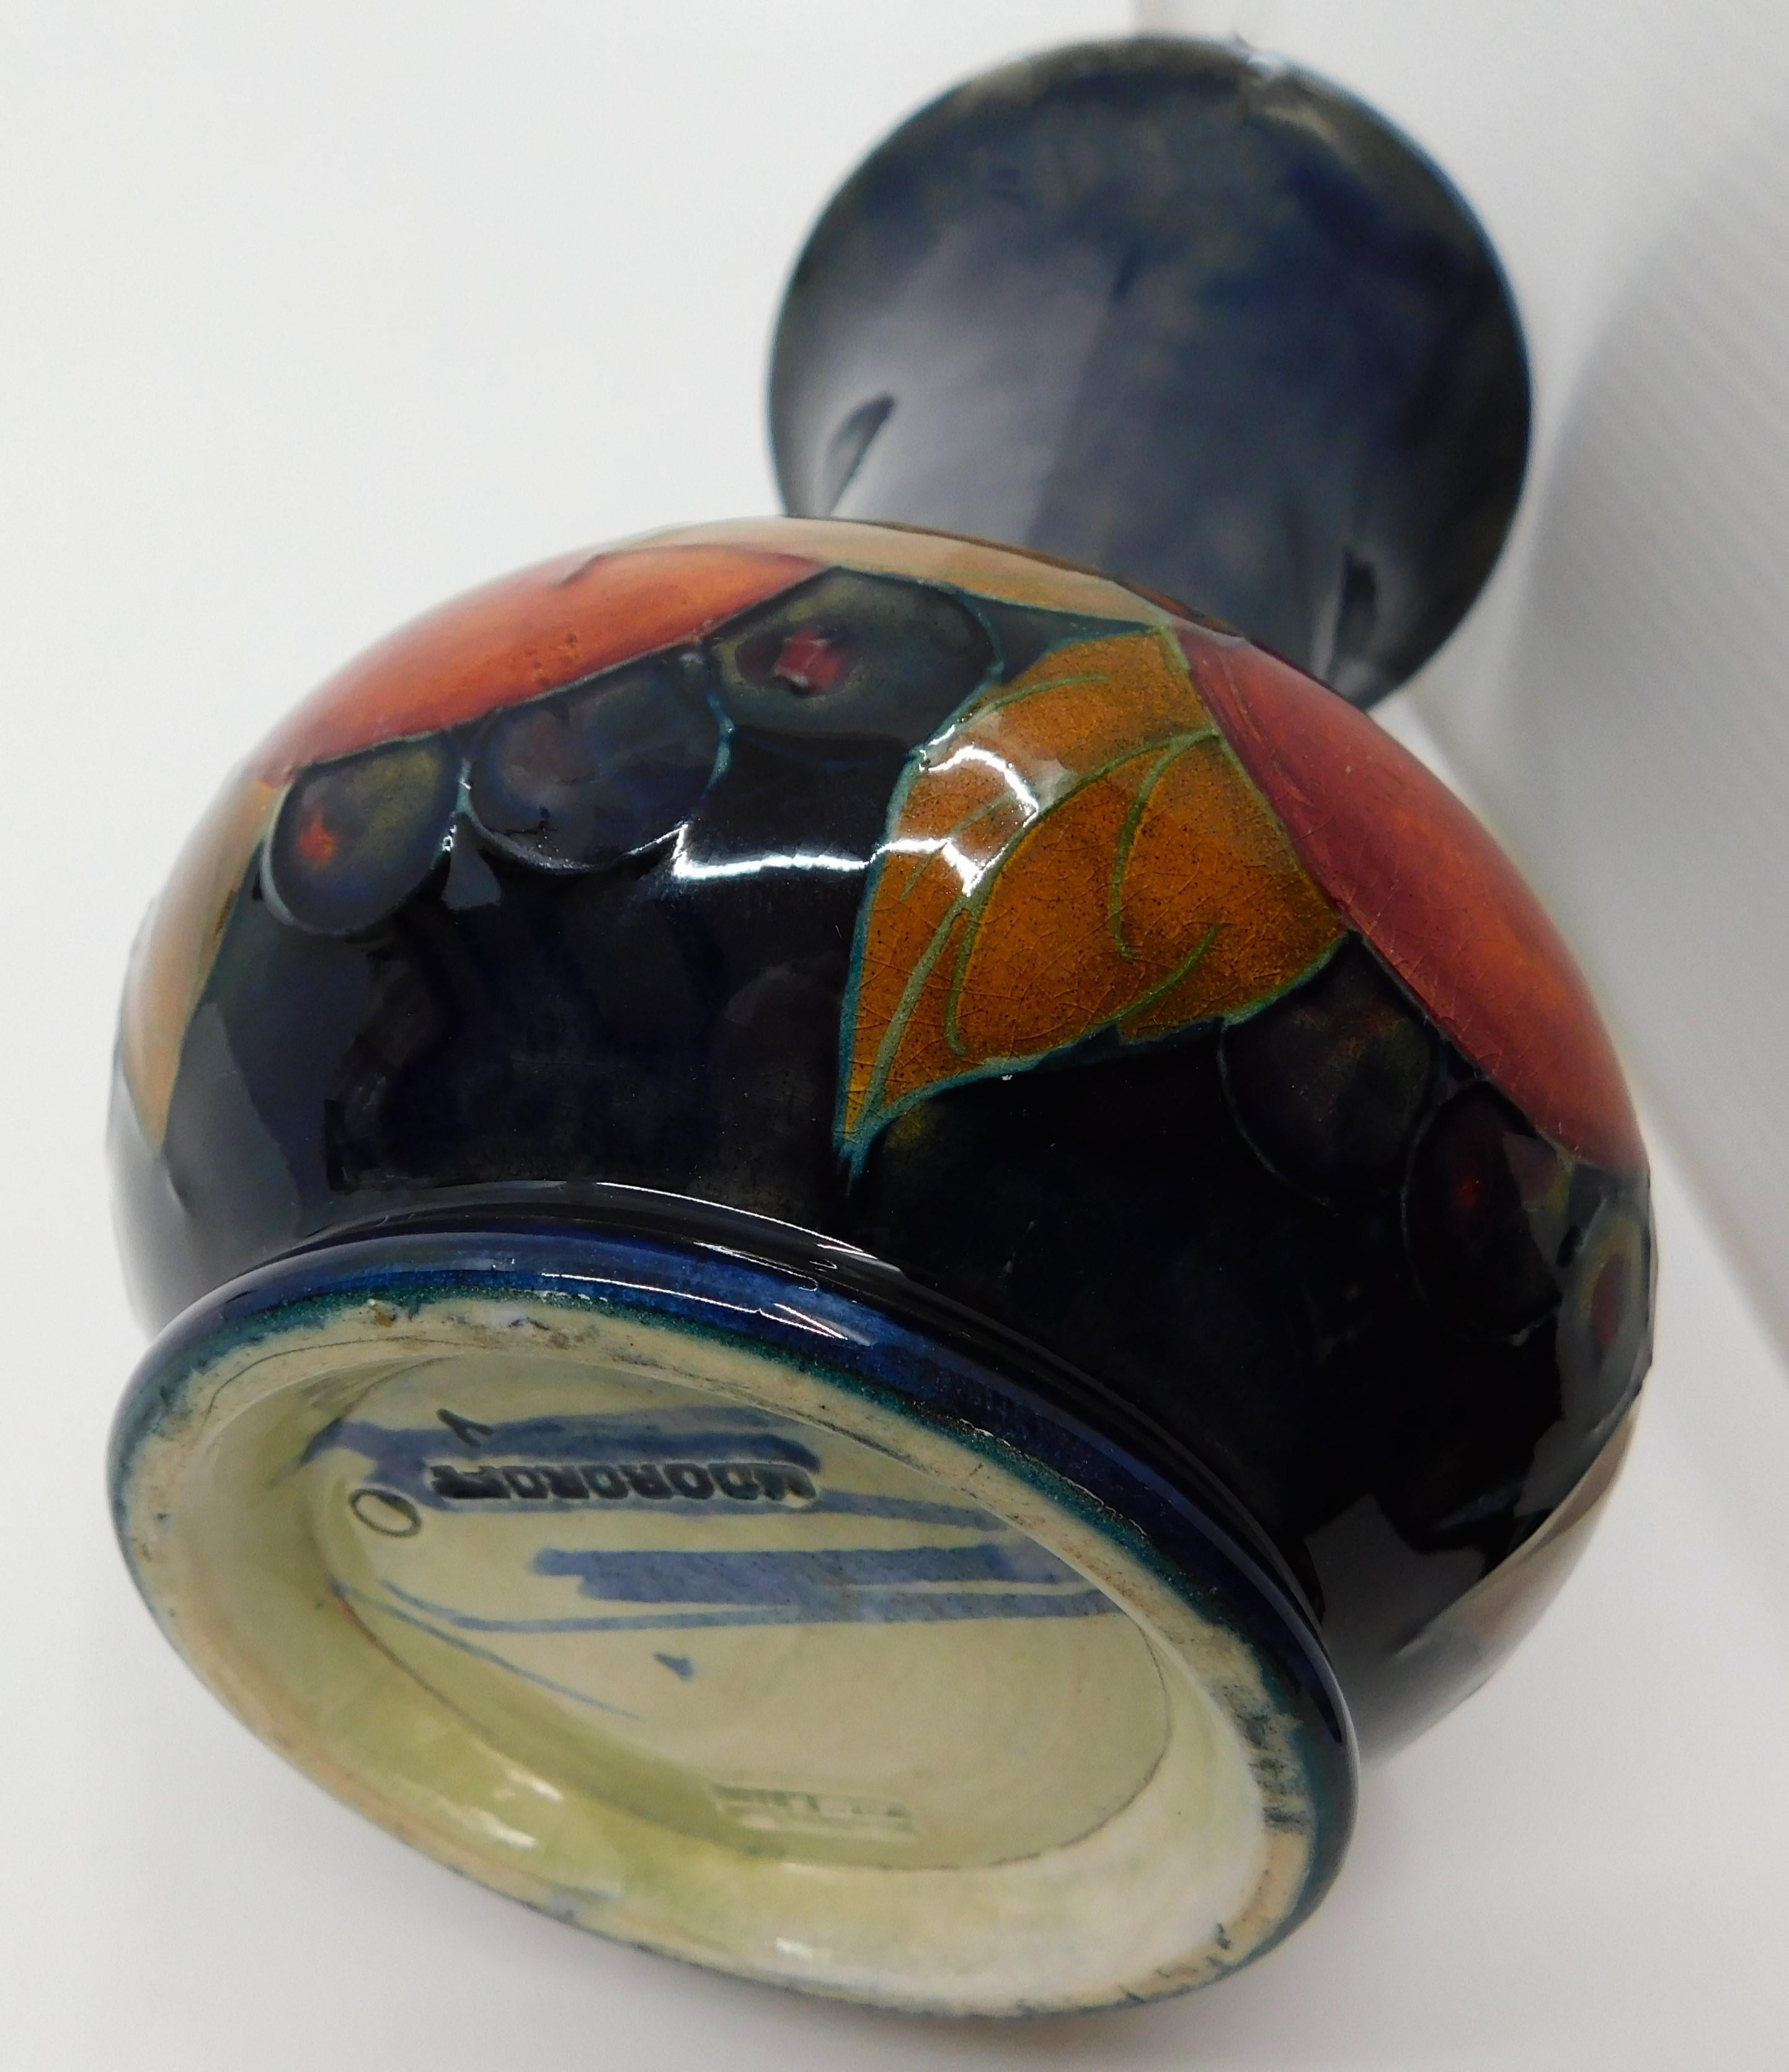 Signed William Moorcroft Pomegranate Cobalt Wisteria Art Pottery Vase Circa 1950 For Sale 1